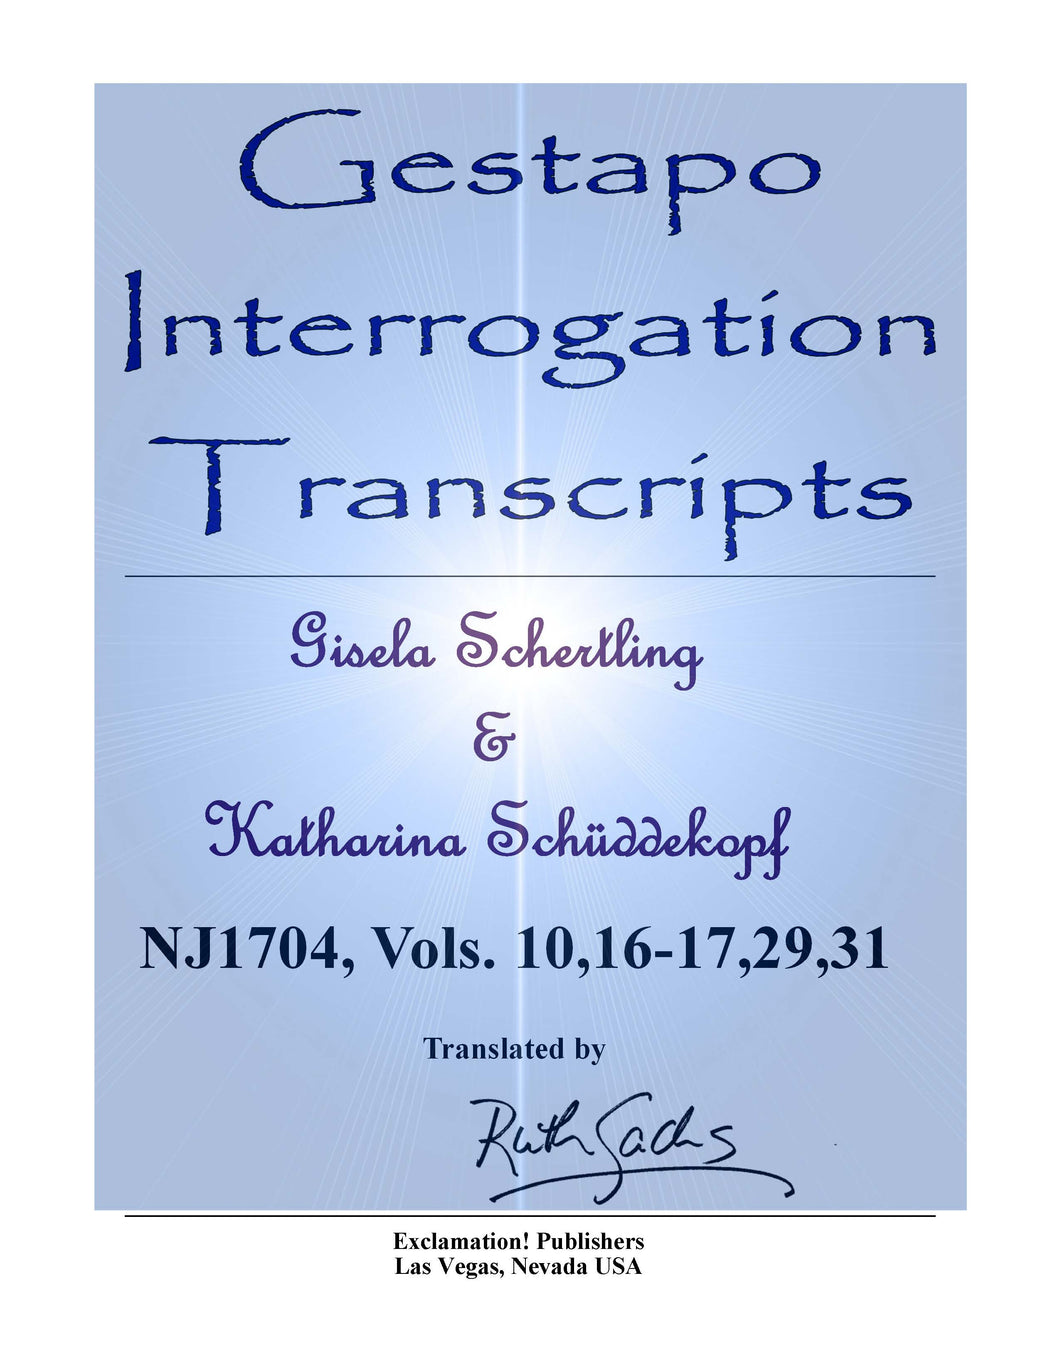 Gestapo Interrogation Transcripts: Schertling and Schüddekopf. NJ1704 Vols. 10, 16-17, 29, 31.